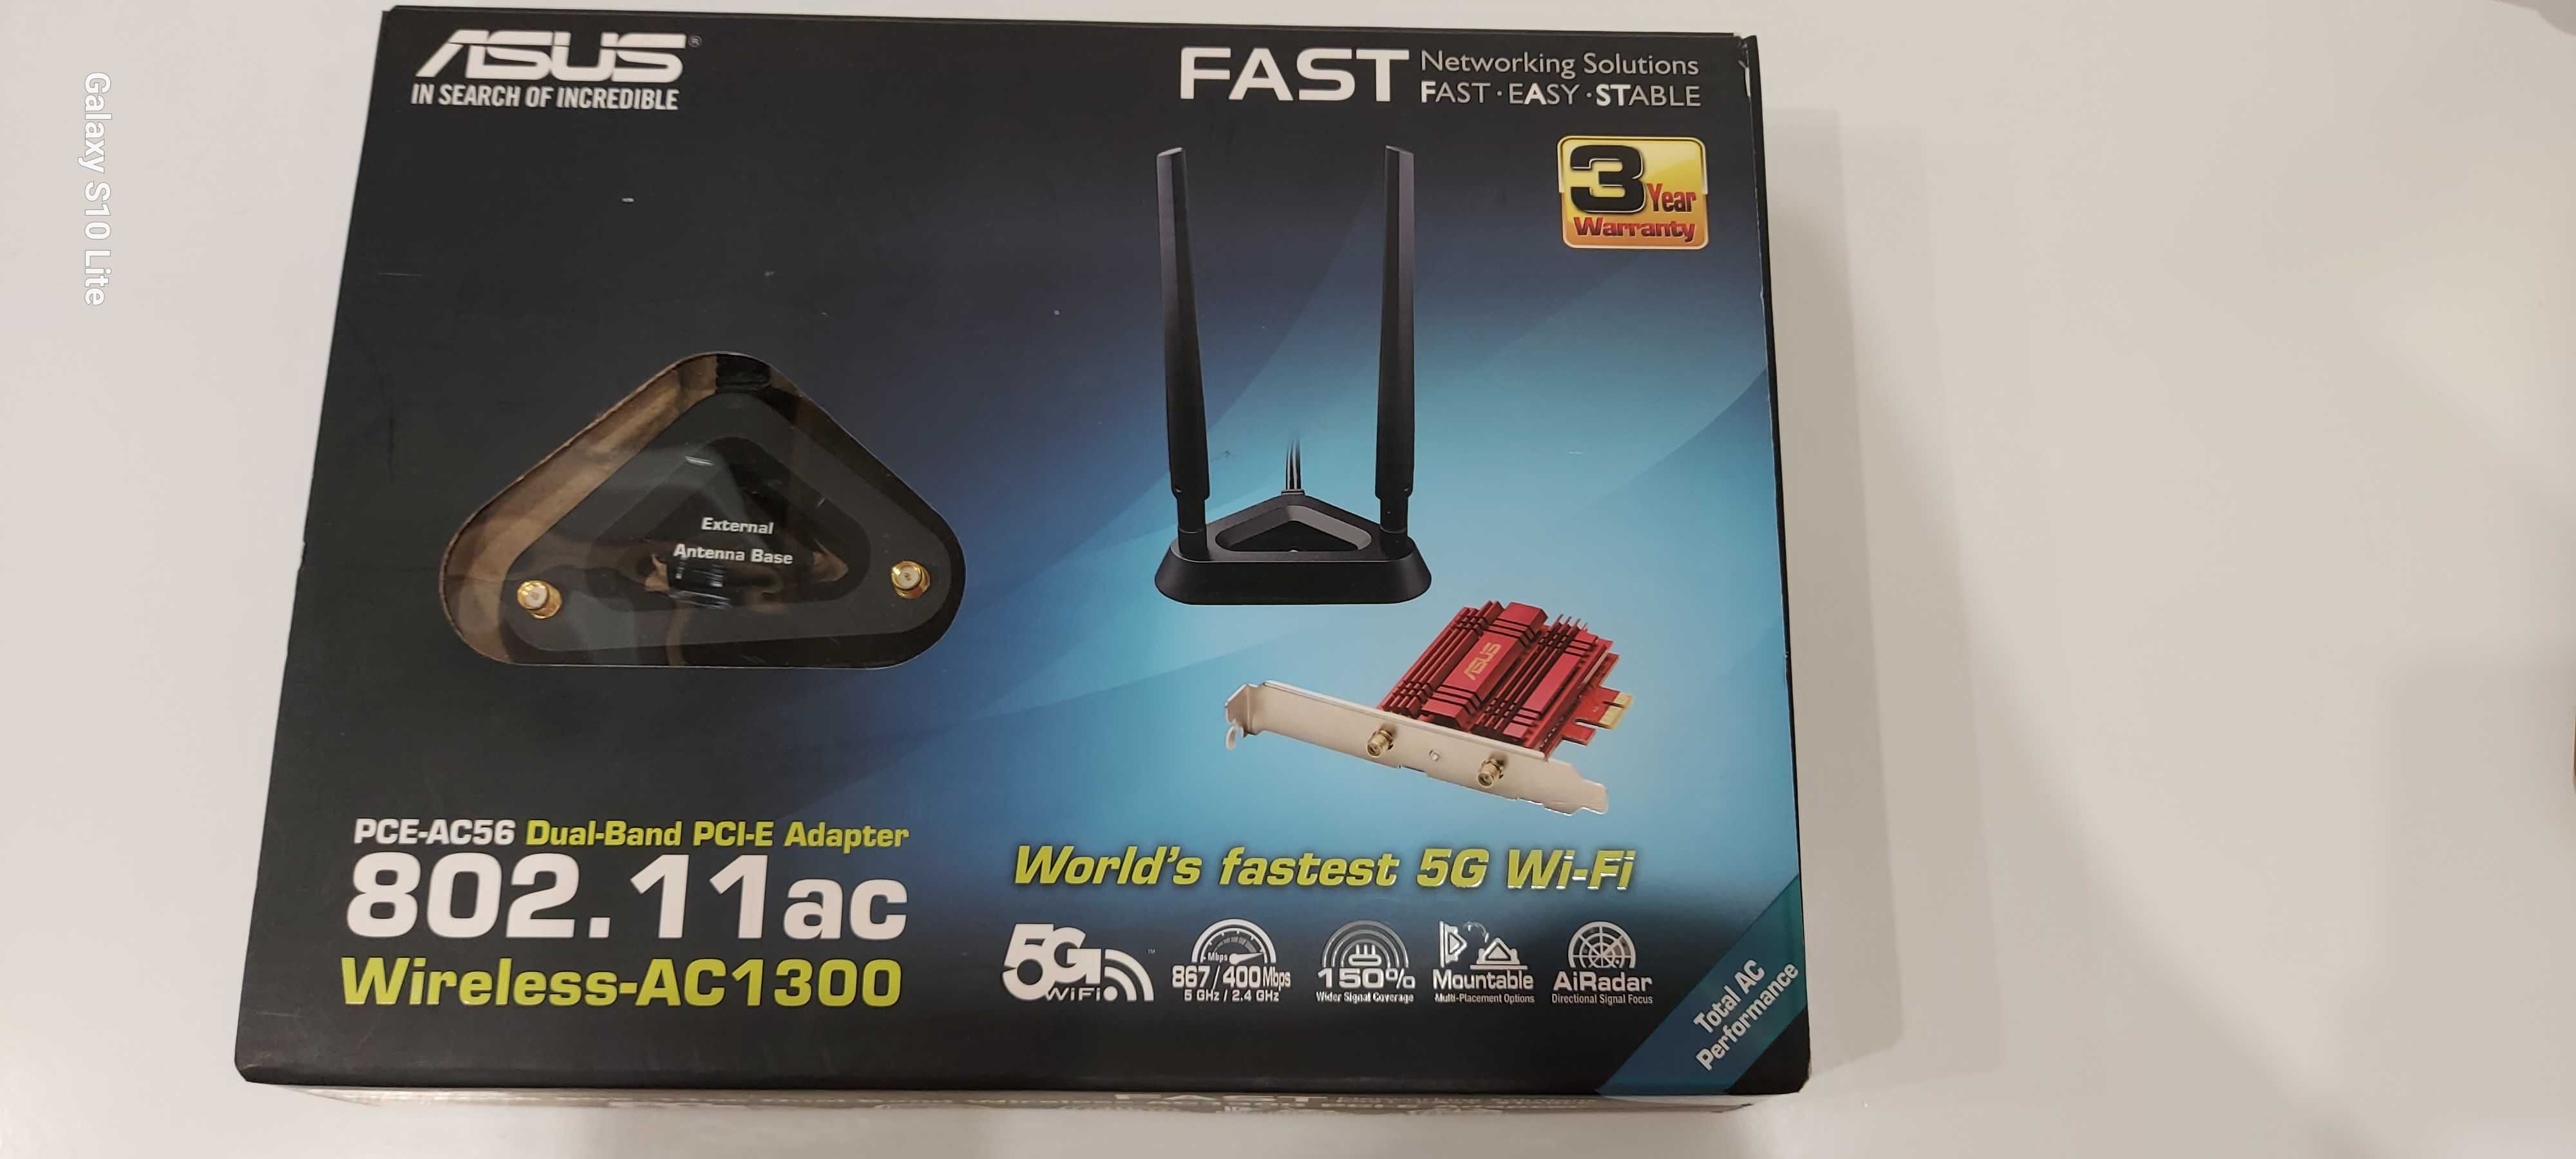 Karta sieciowa Wireless-AC1300 ASUS pce-ac56 802.11ac 5G wi-fi fast